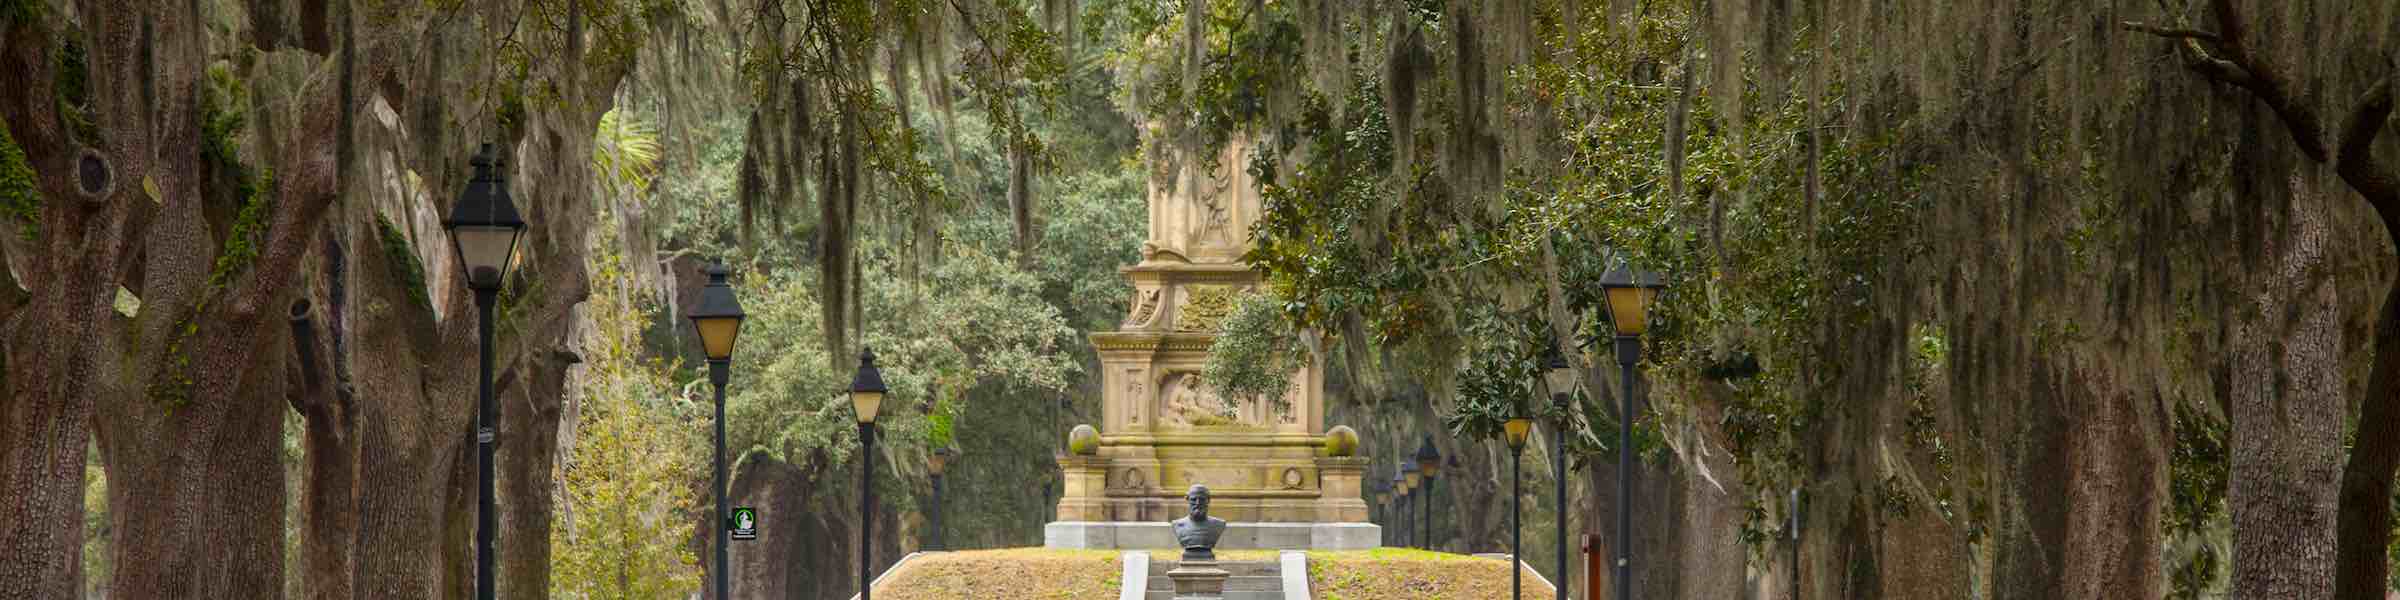 The Confederate Memorial in Forsyth Park, Savannah, GA, seen through moss-covered live oaks.